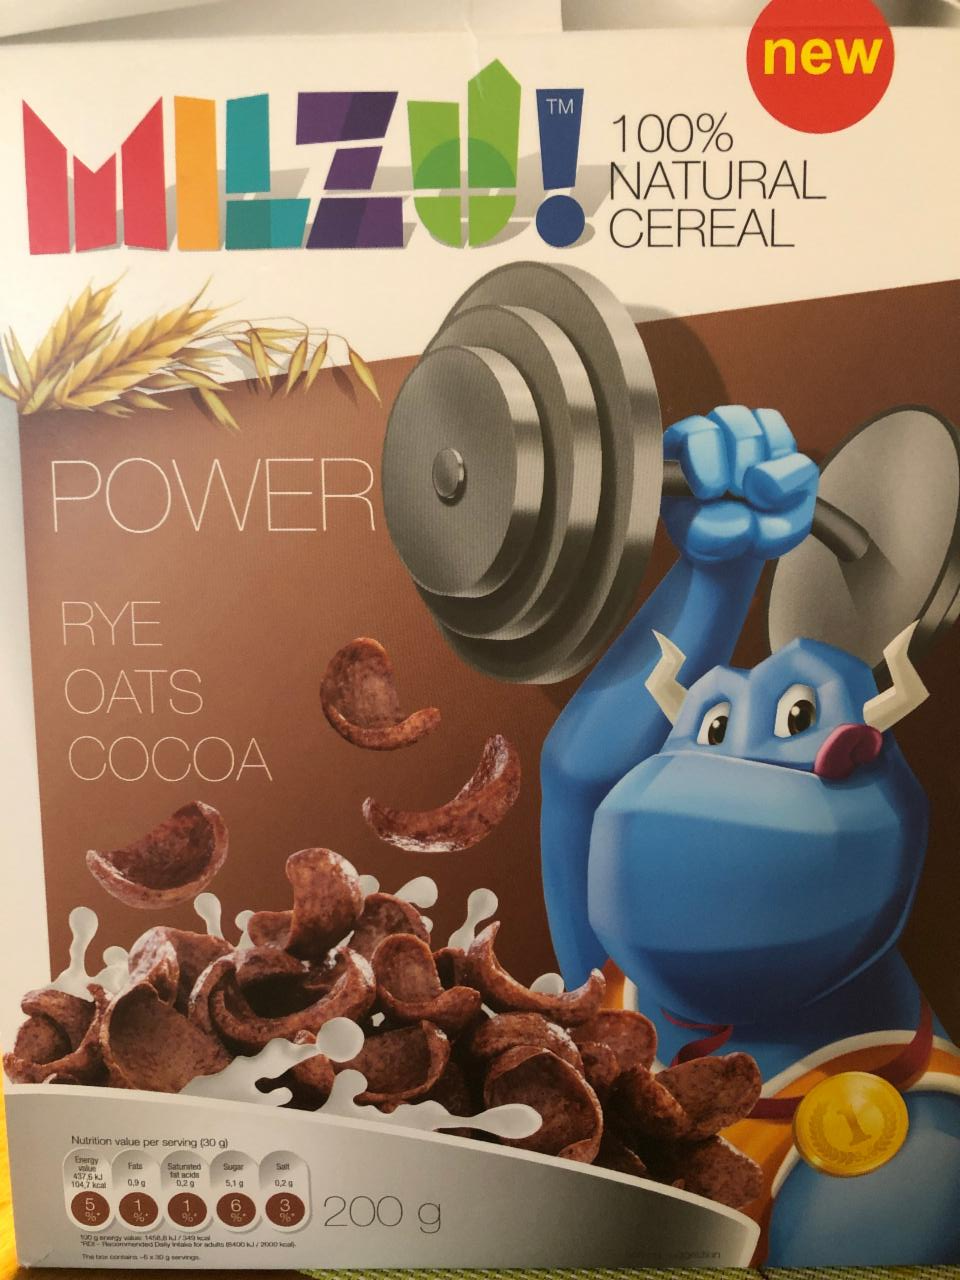 Fotografie - 100% natural cereal Rye Oats Cocoa MILZU!